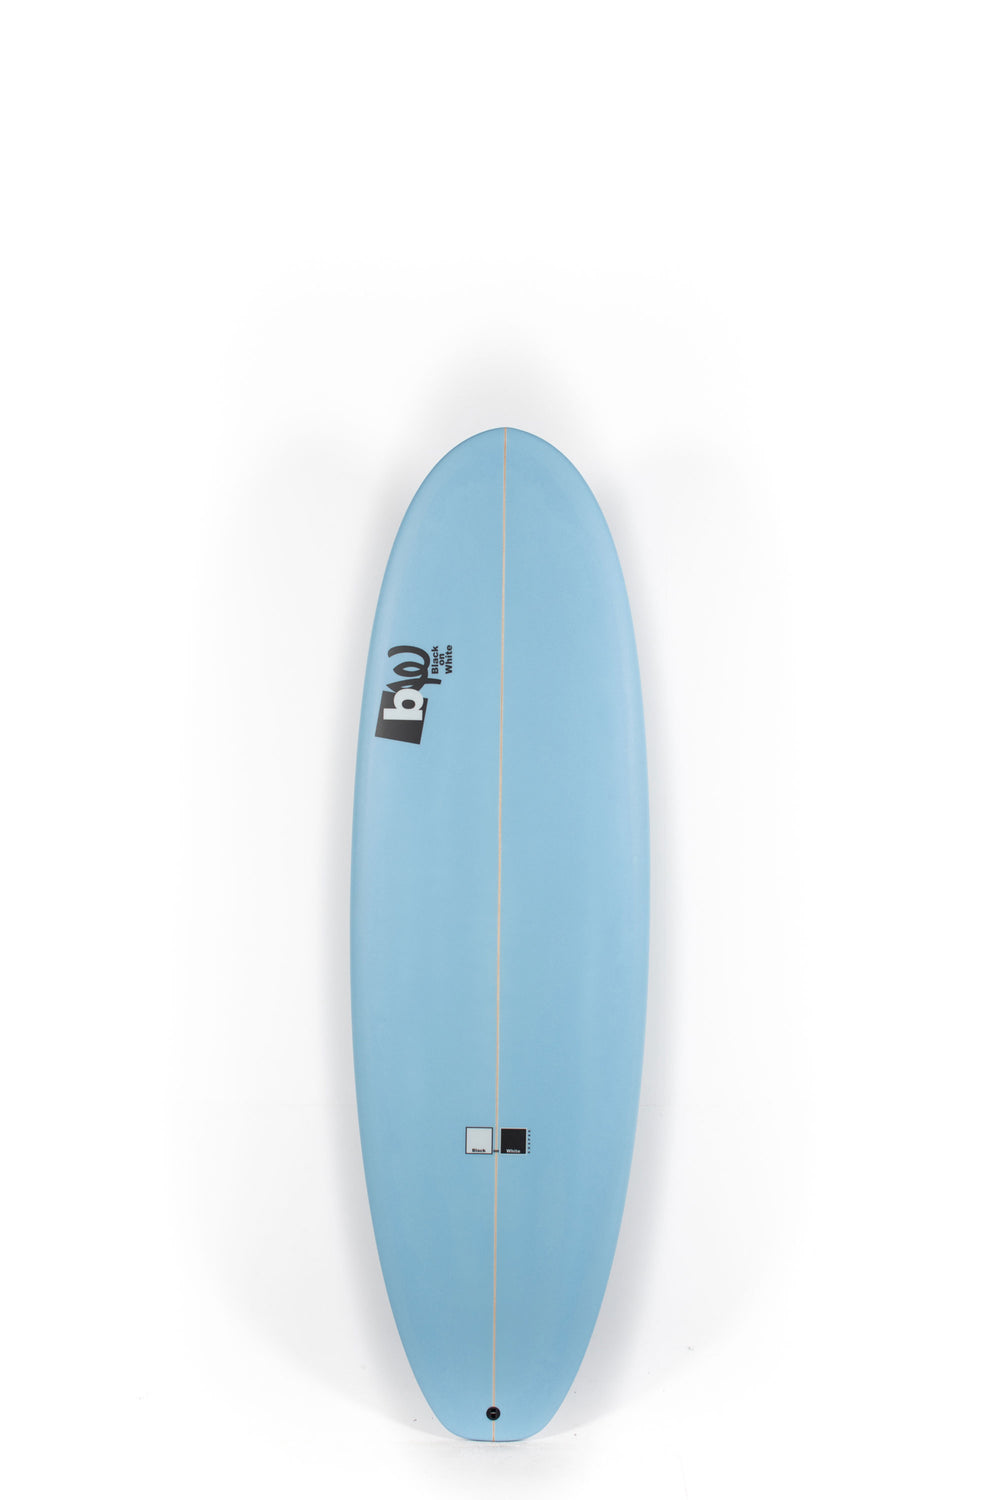 BW SURFBOARDS - Potato 6'4